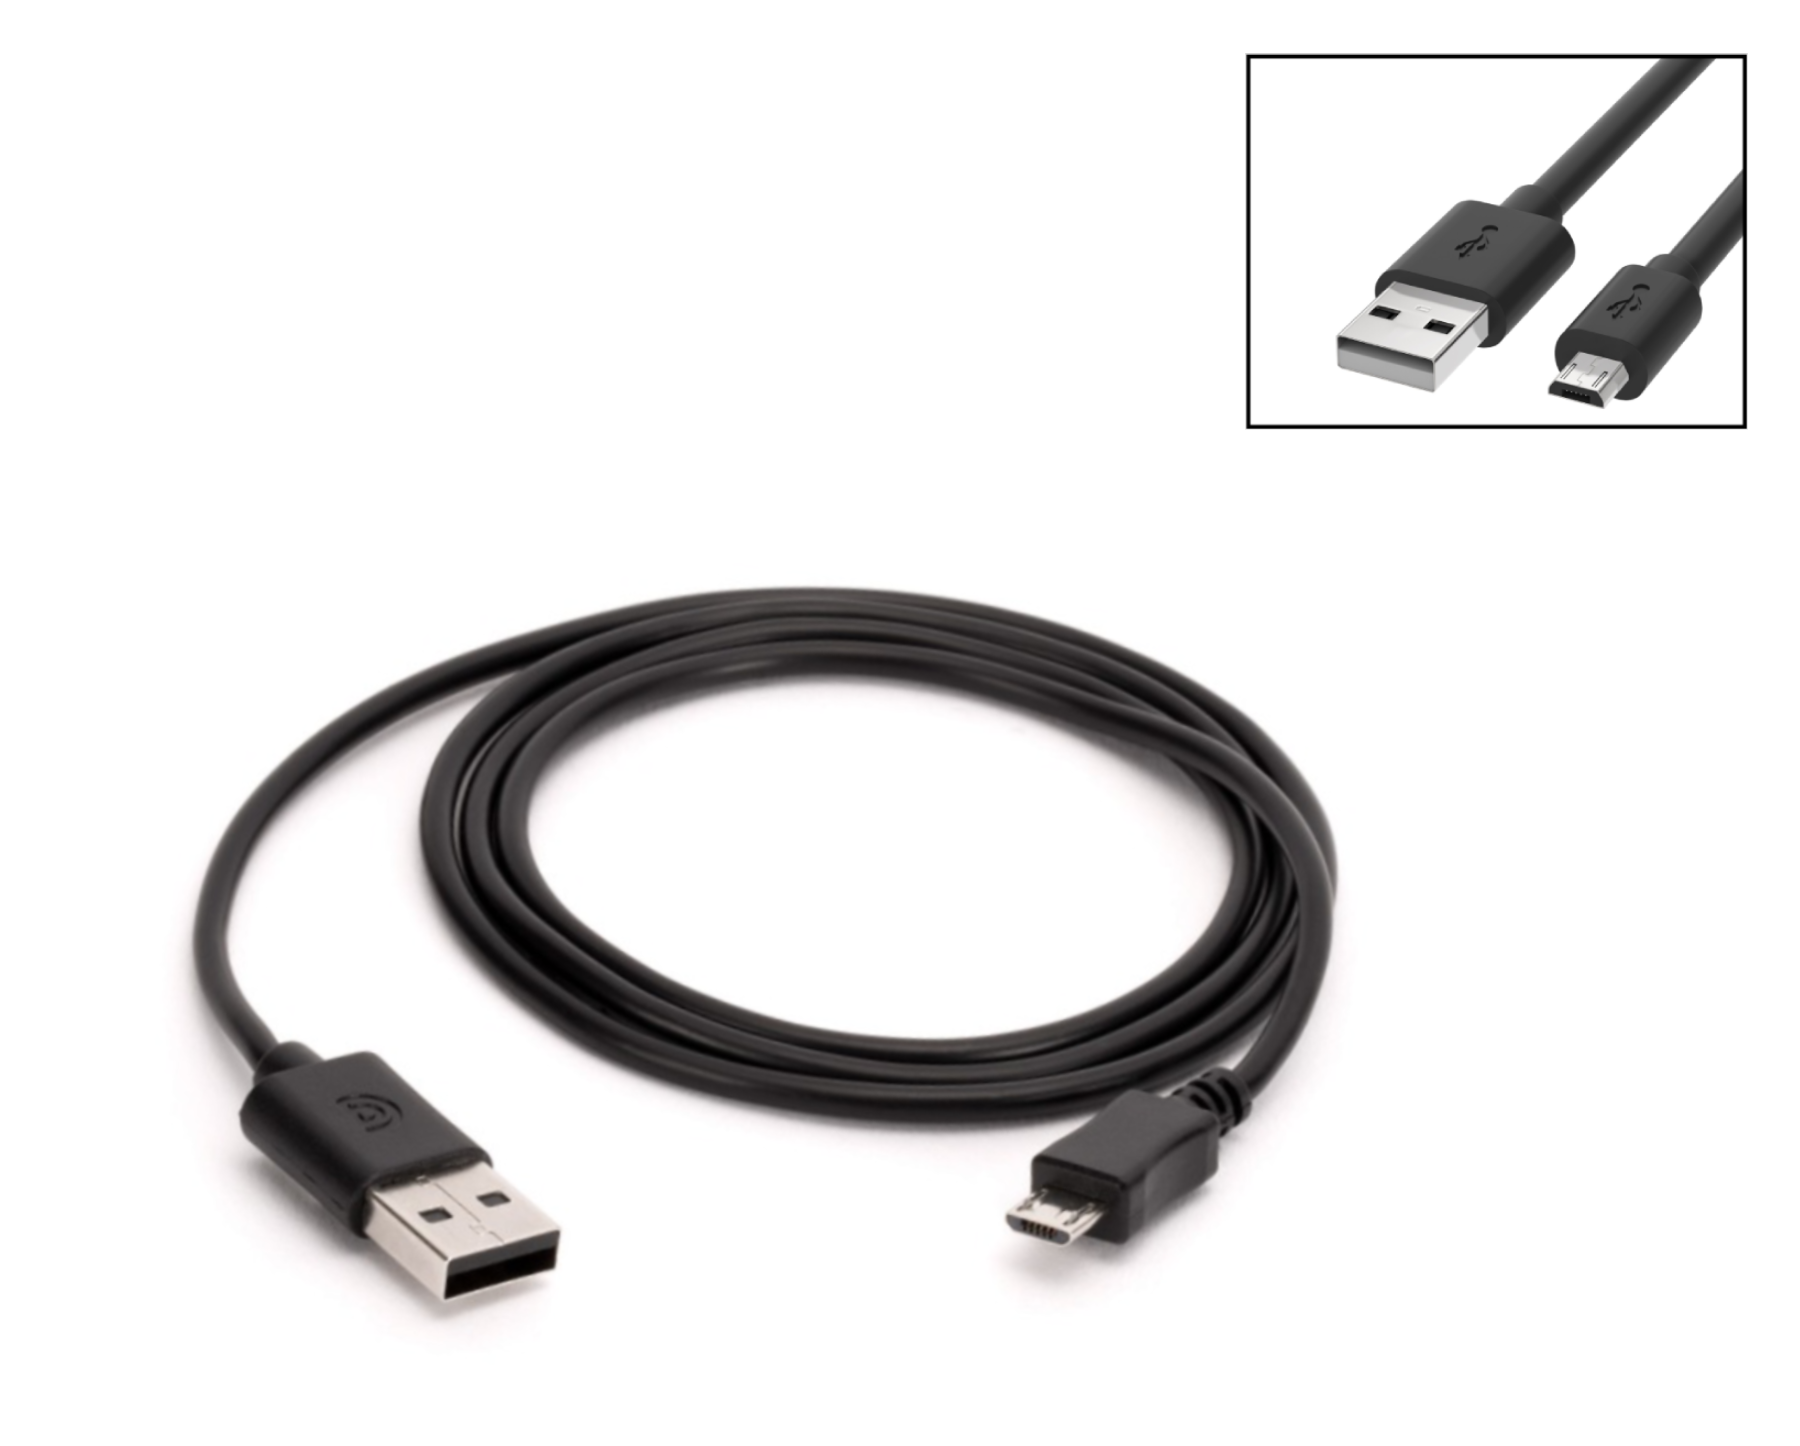 Micro U S B Cable.